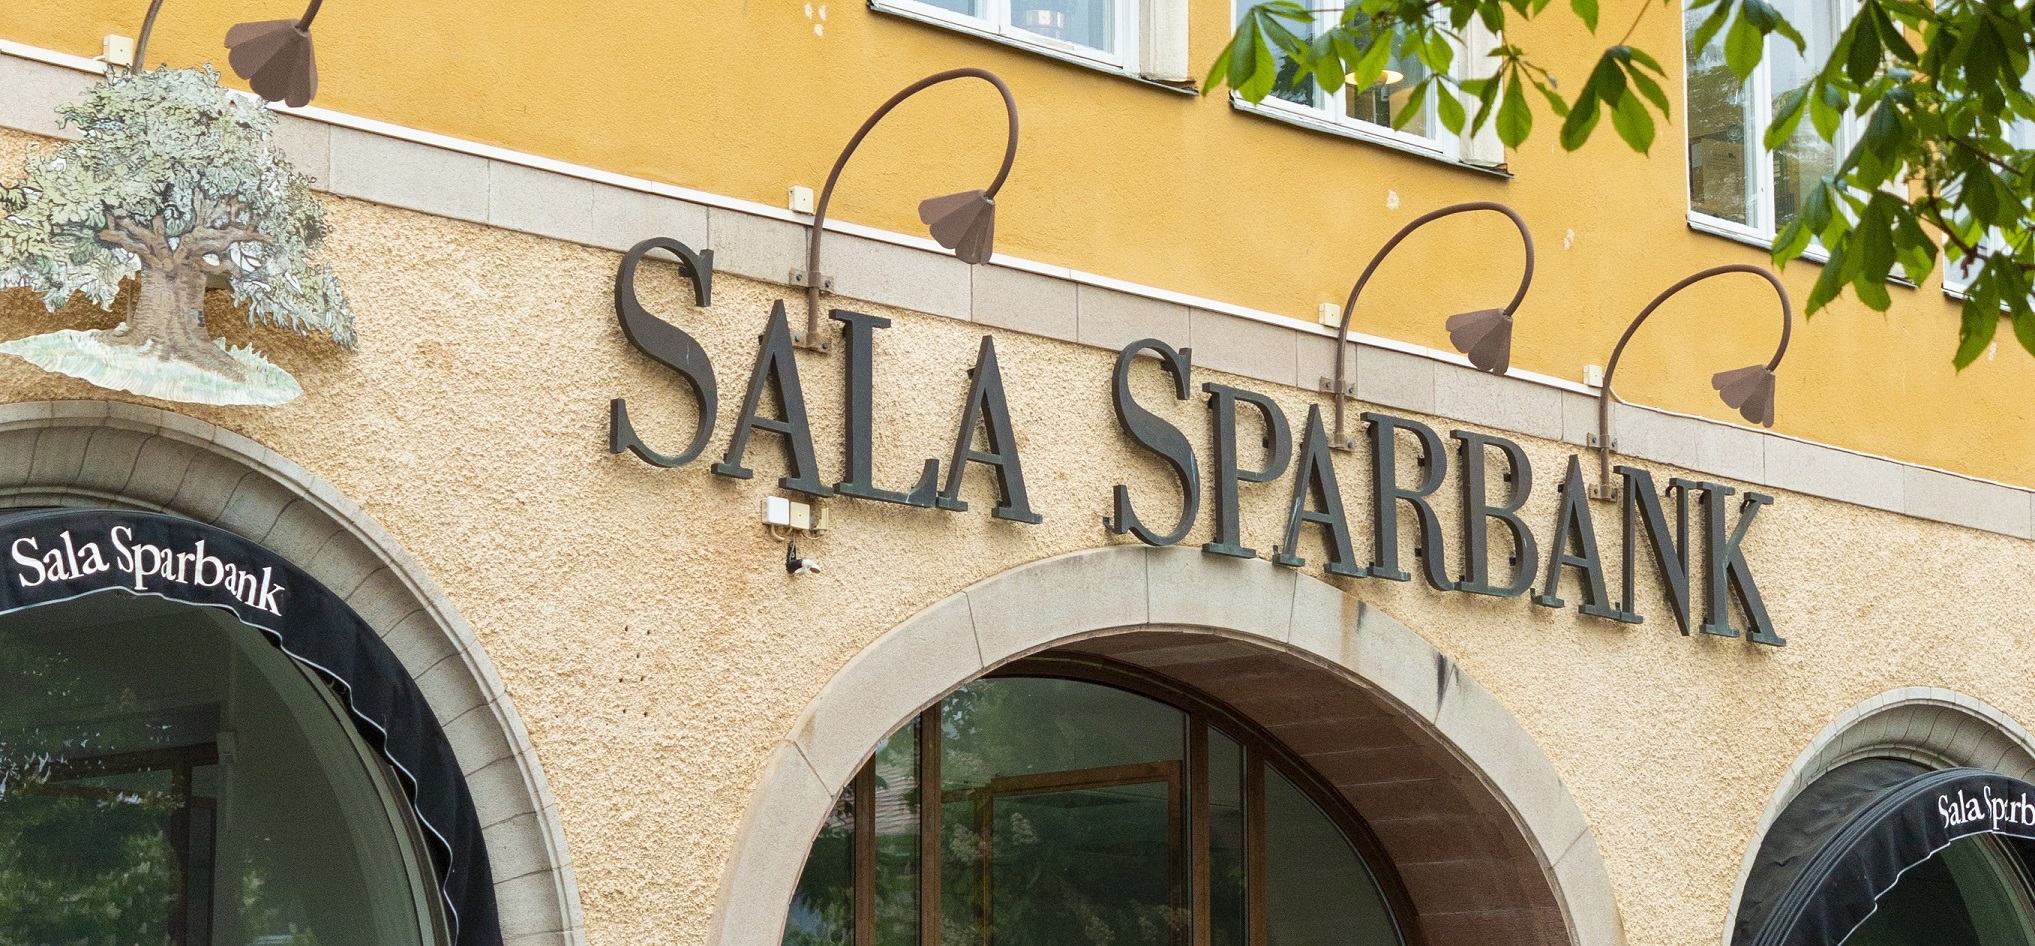 Sala Sparbank